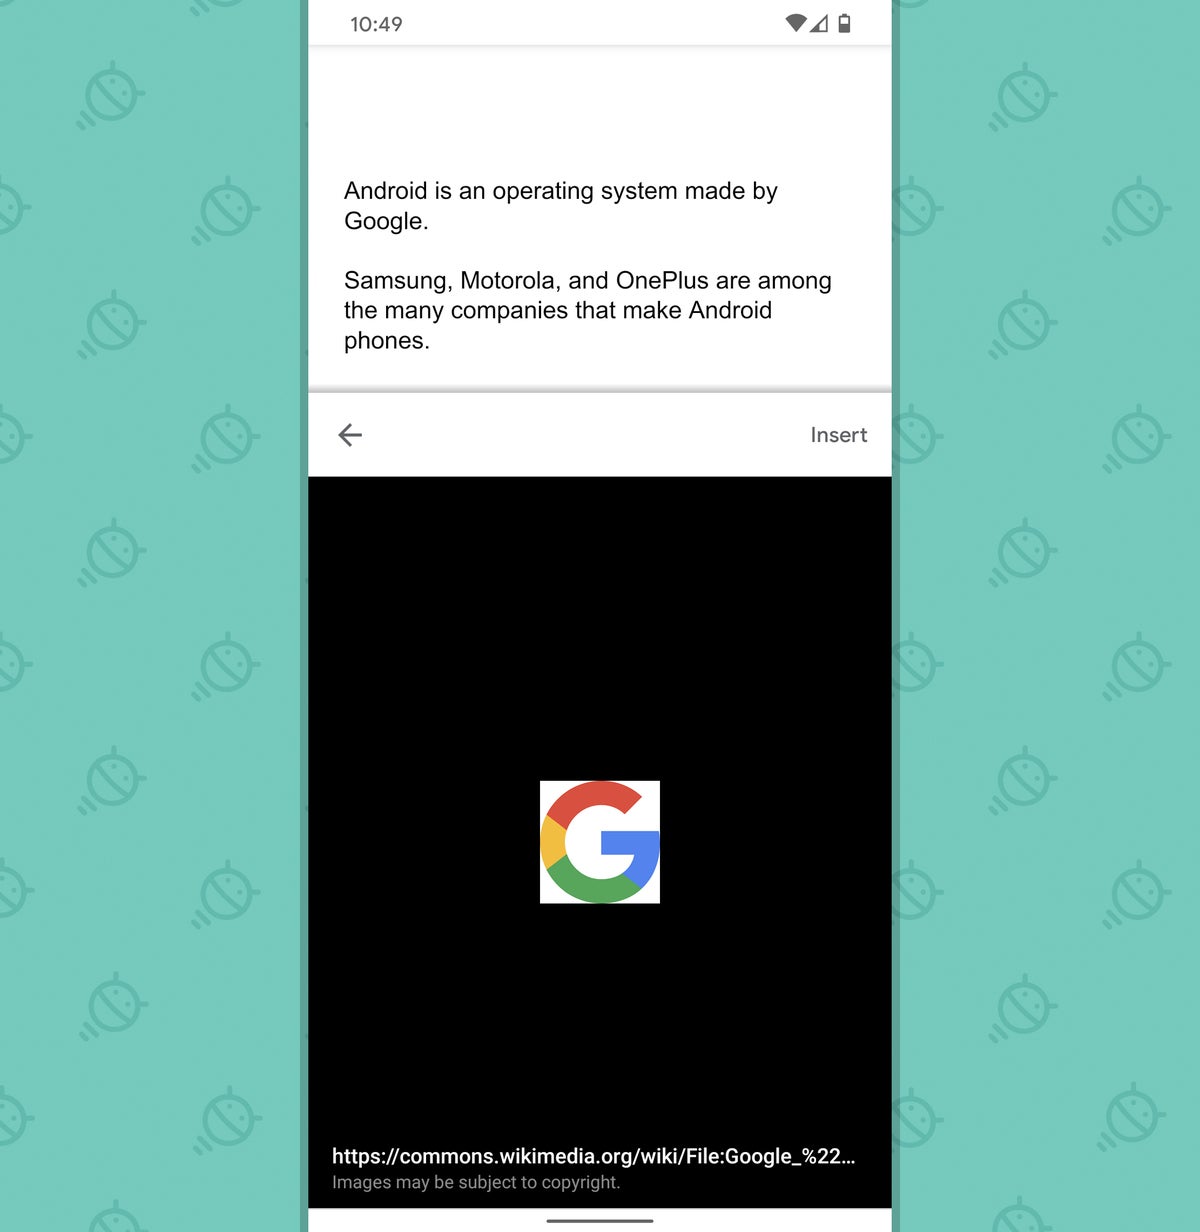 Google Docs Android: Explore - insert image